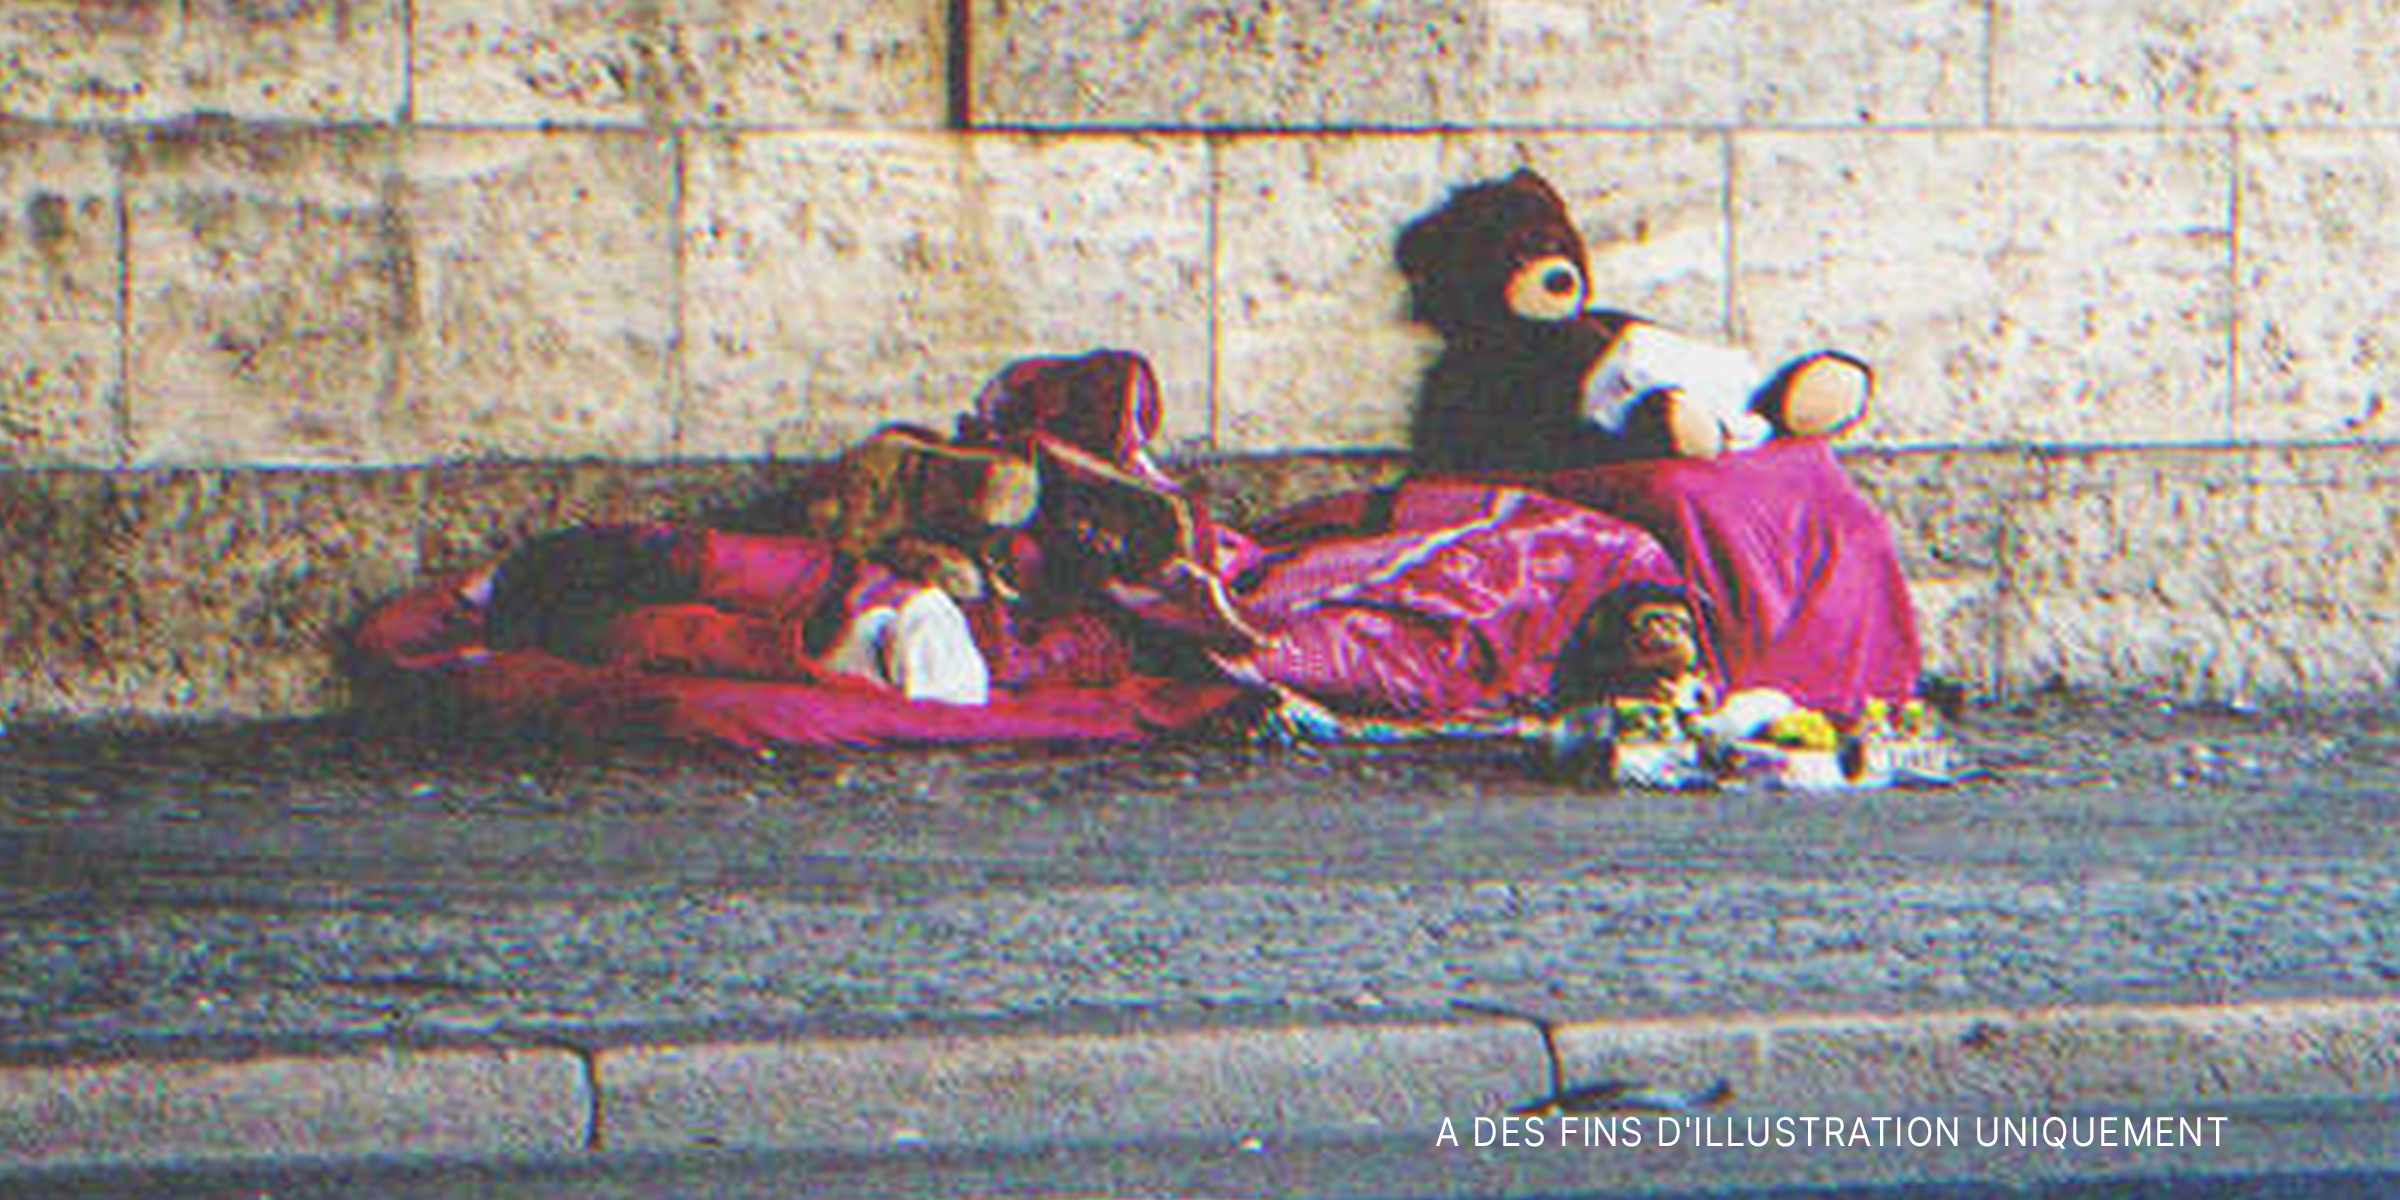 Une petite fille dormant dans la rue | Source : Shutterstock